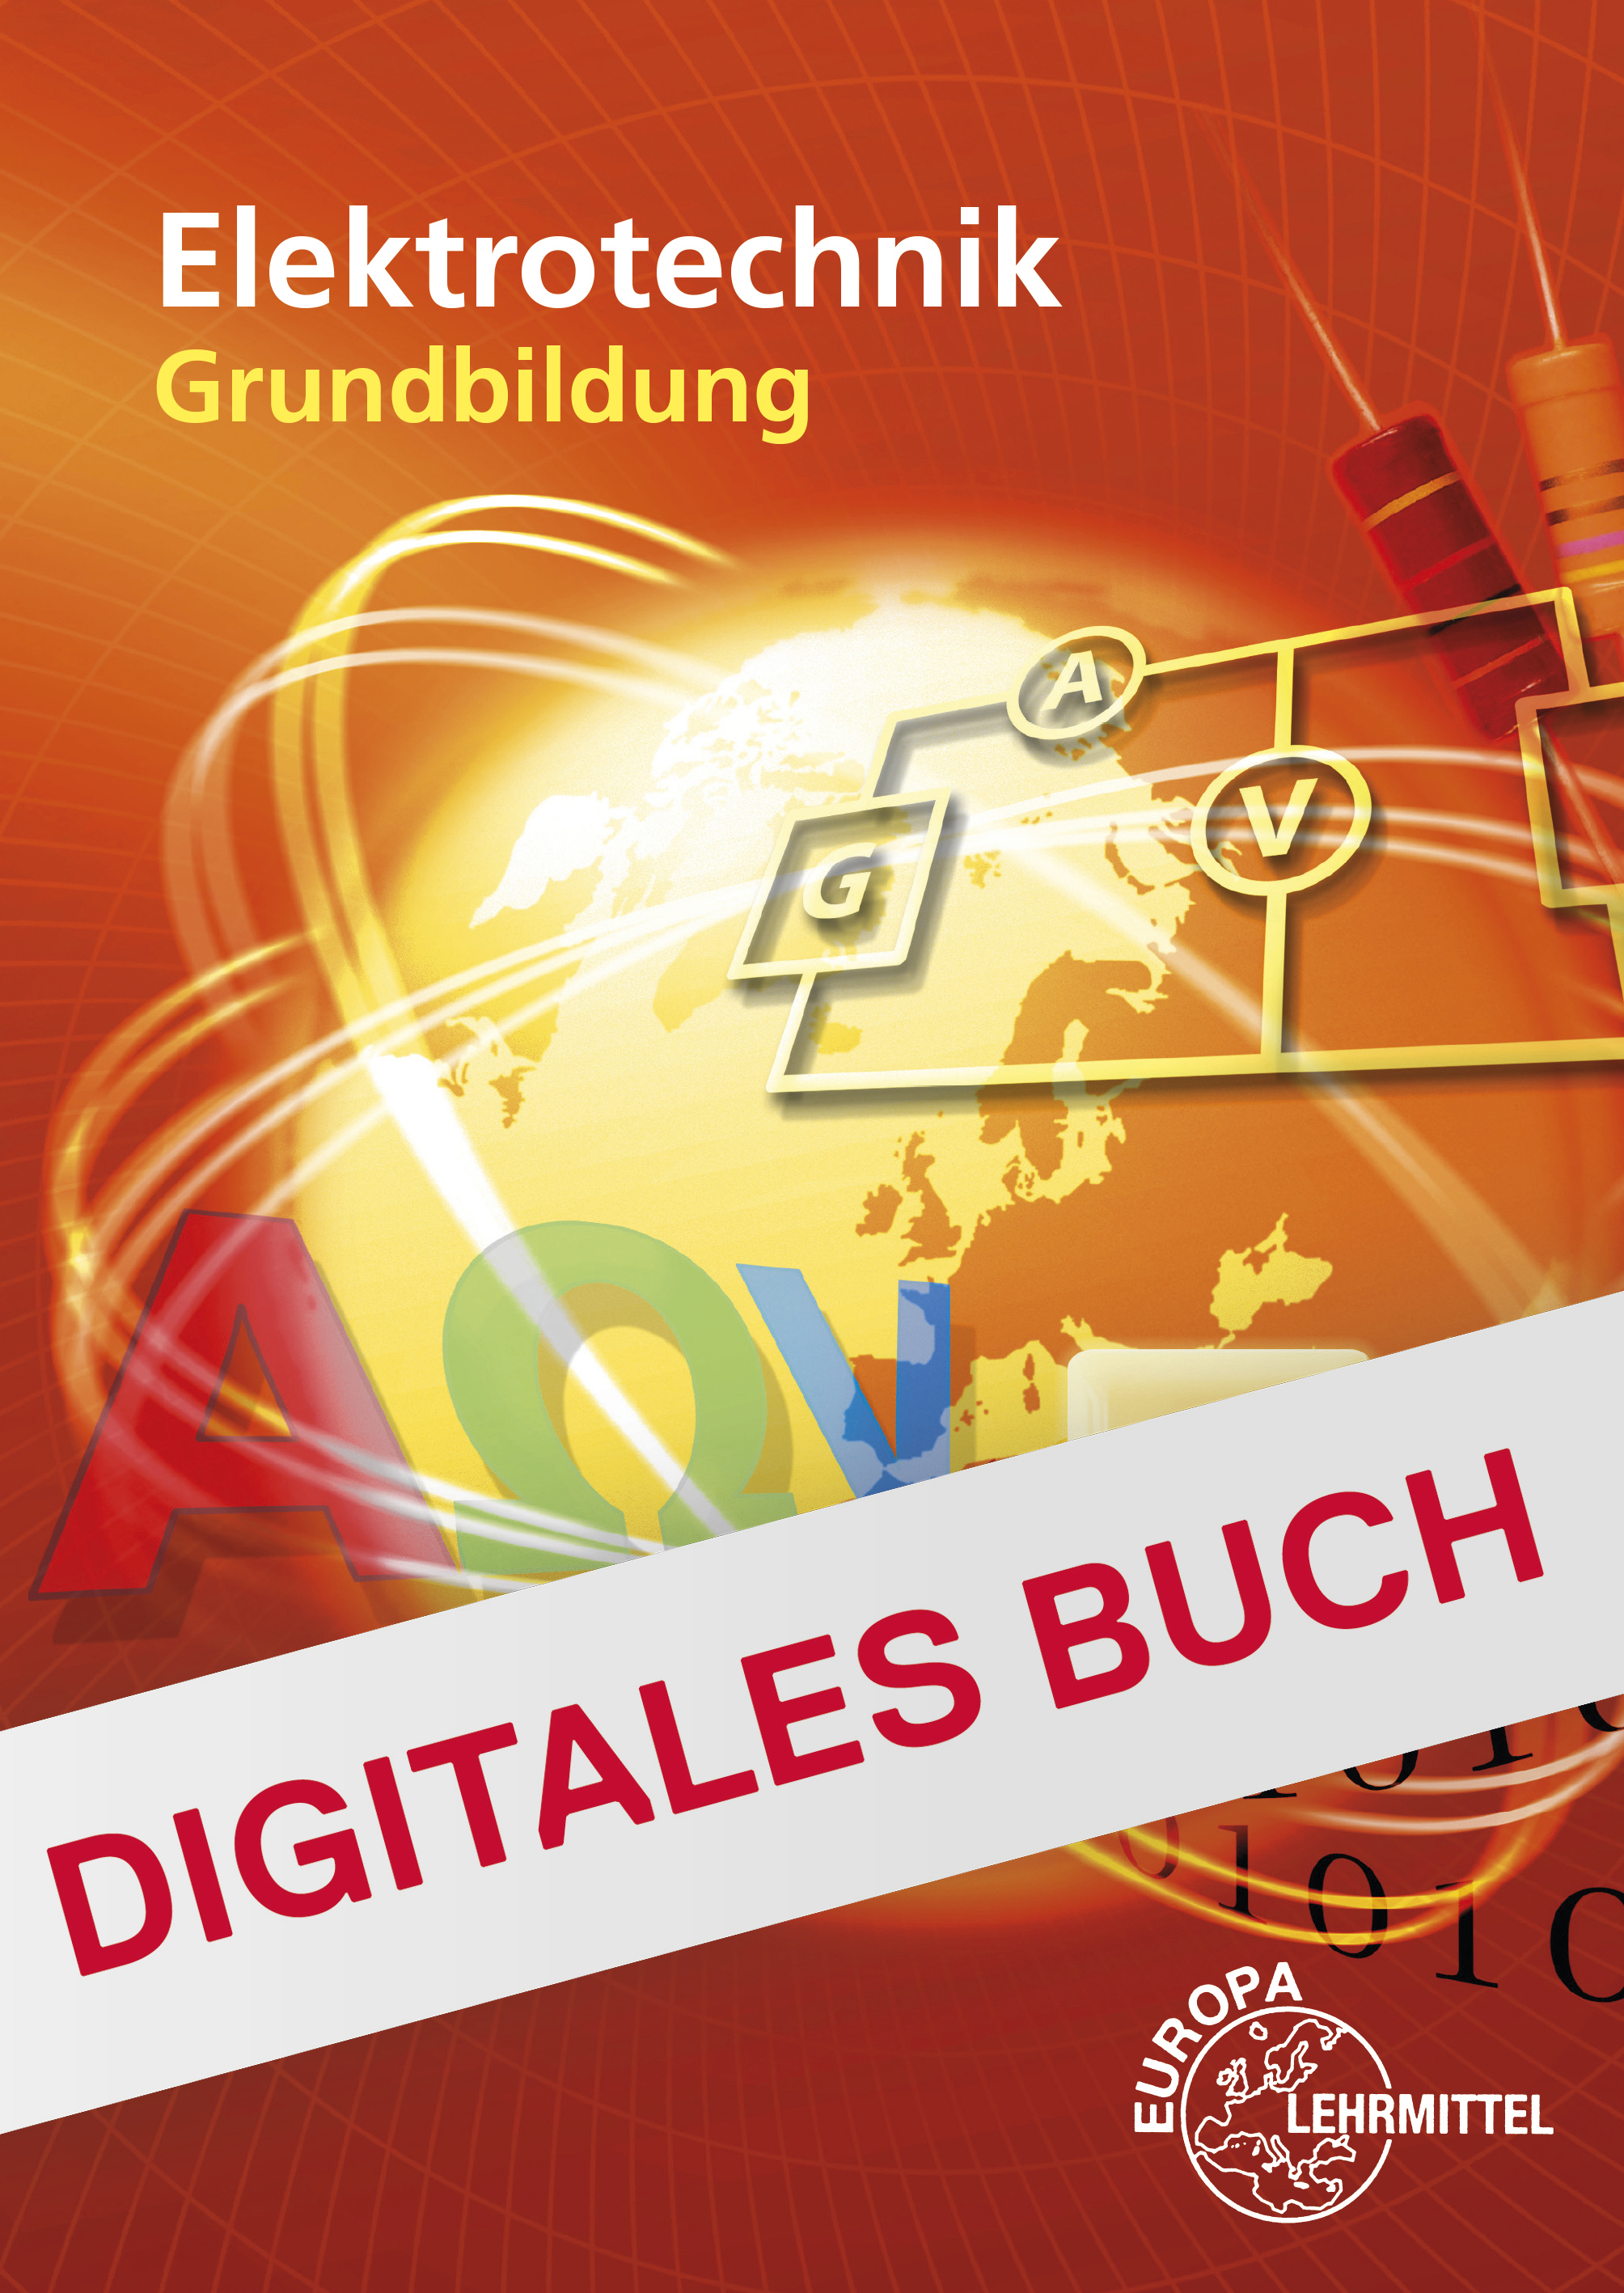 Elektrotechnik Grundbildung - Digitales Buch